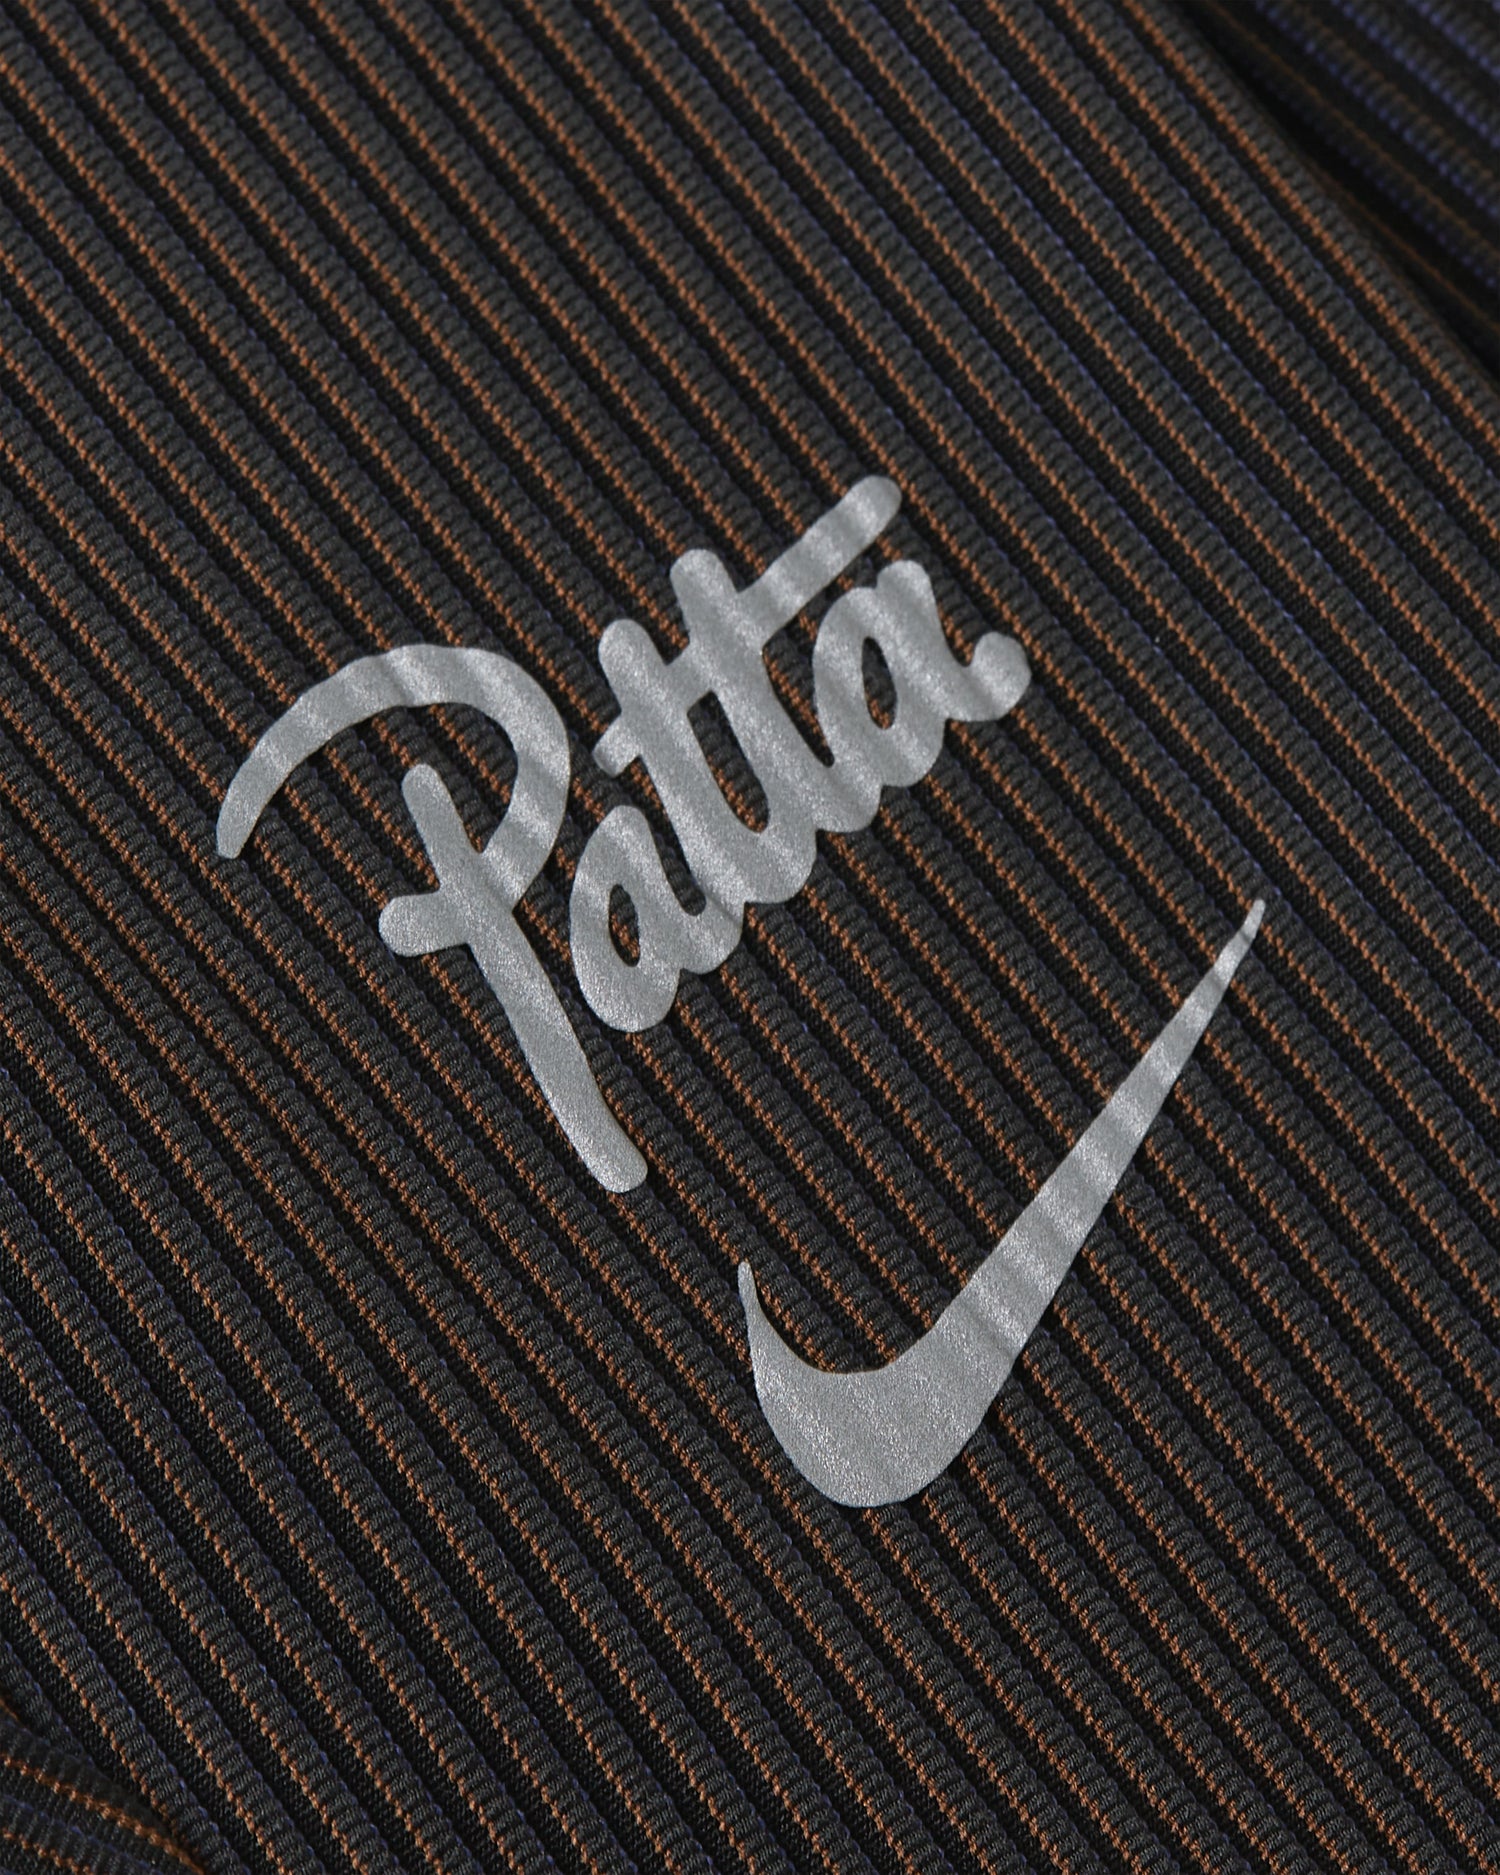 Nike x Patta Running Team Leggings (Black/Deep Royal Blue)